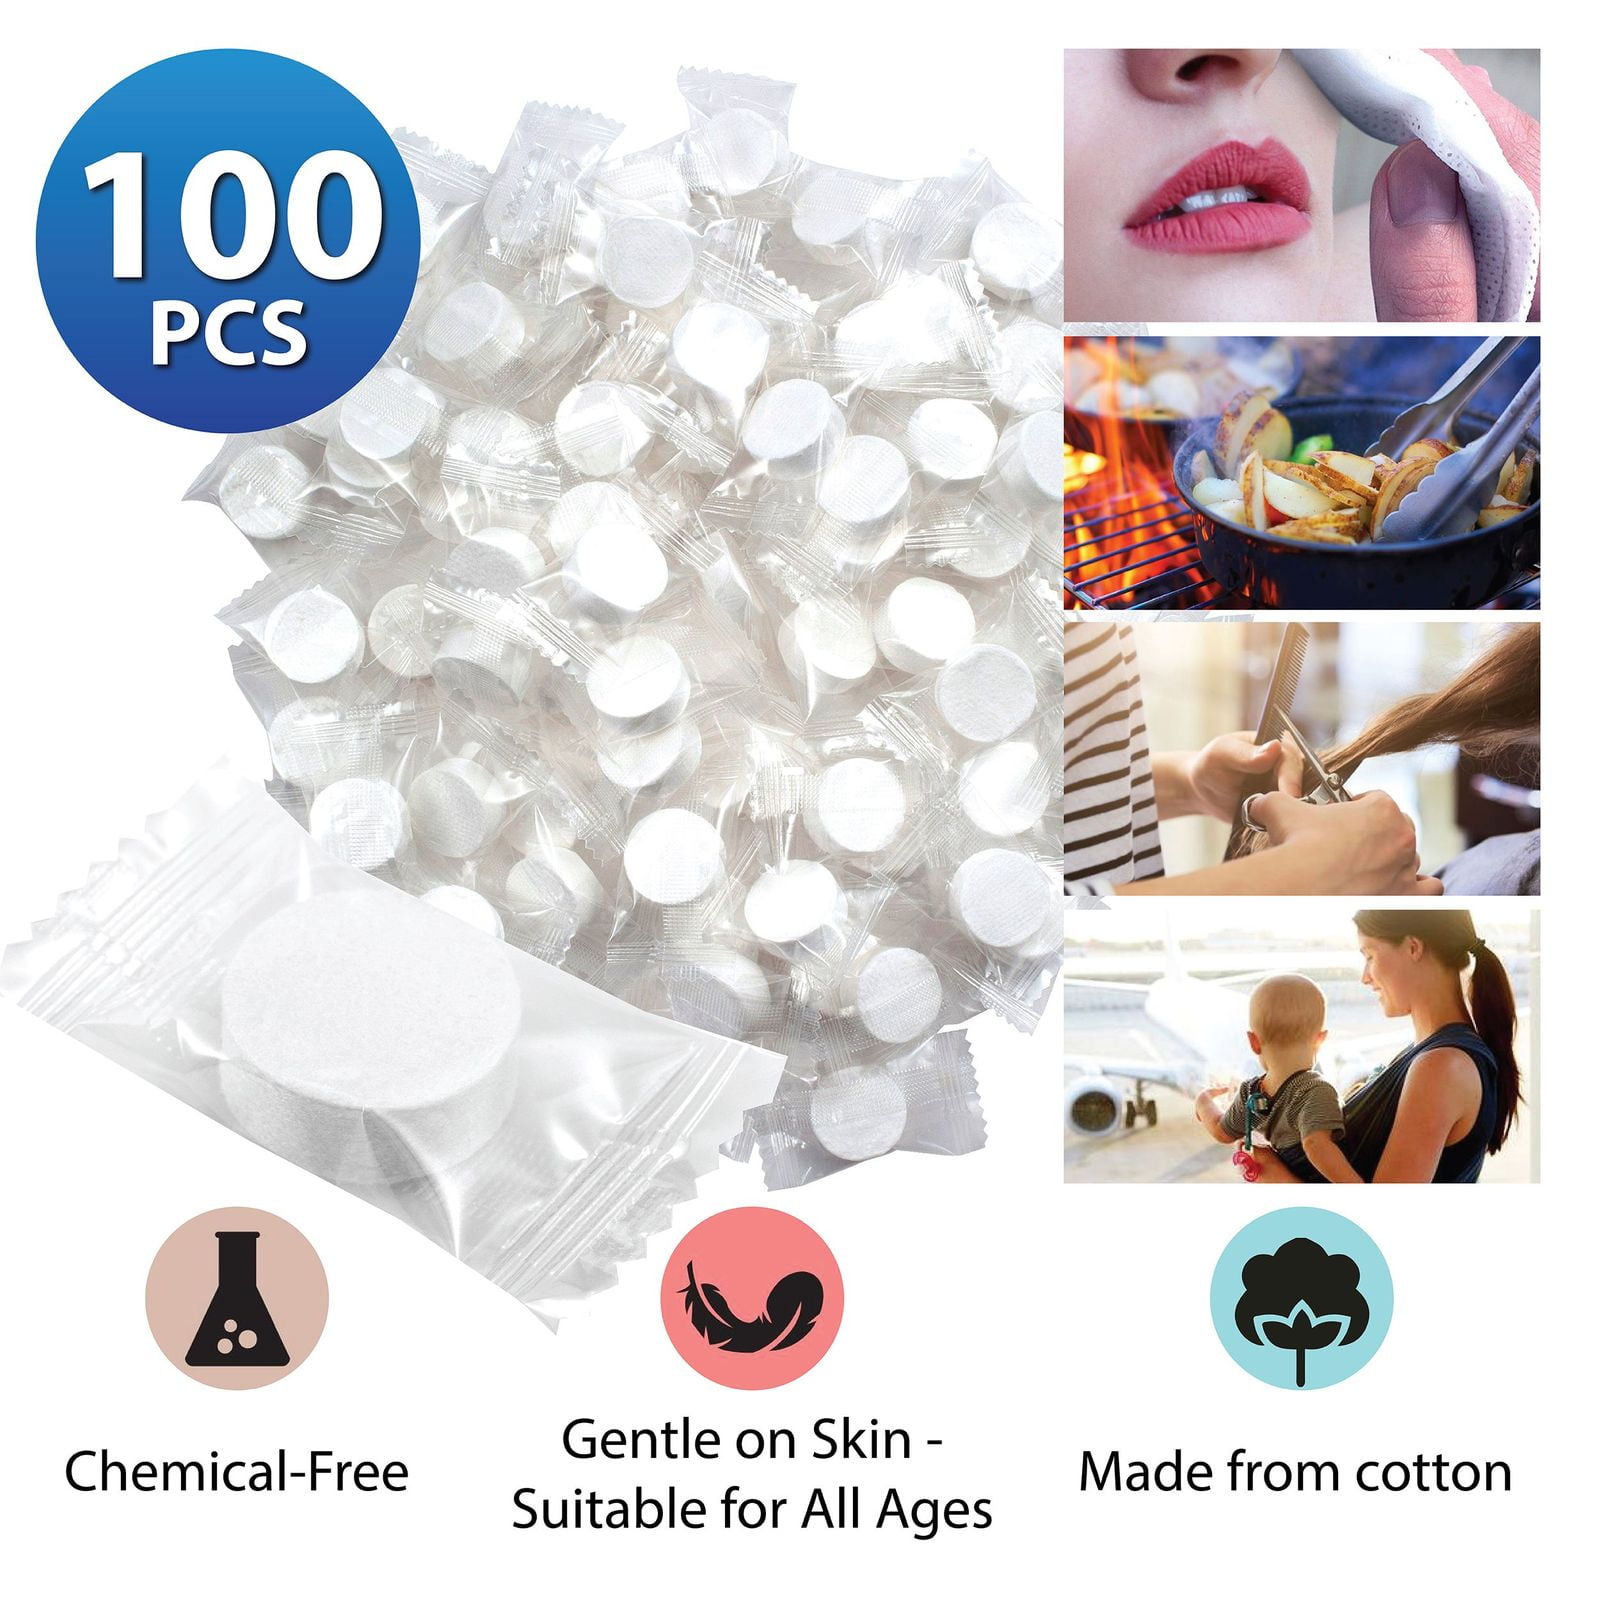 100 PCS Disposable Compressed Towels